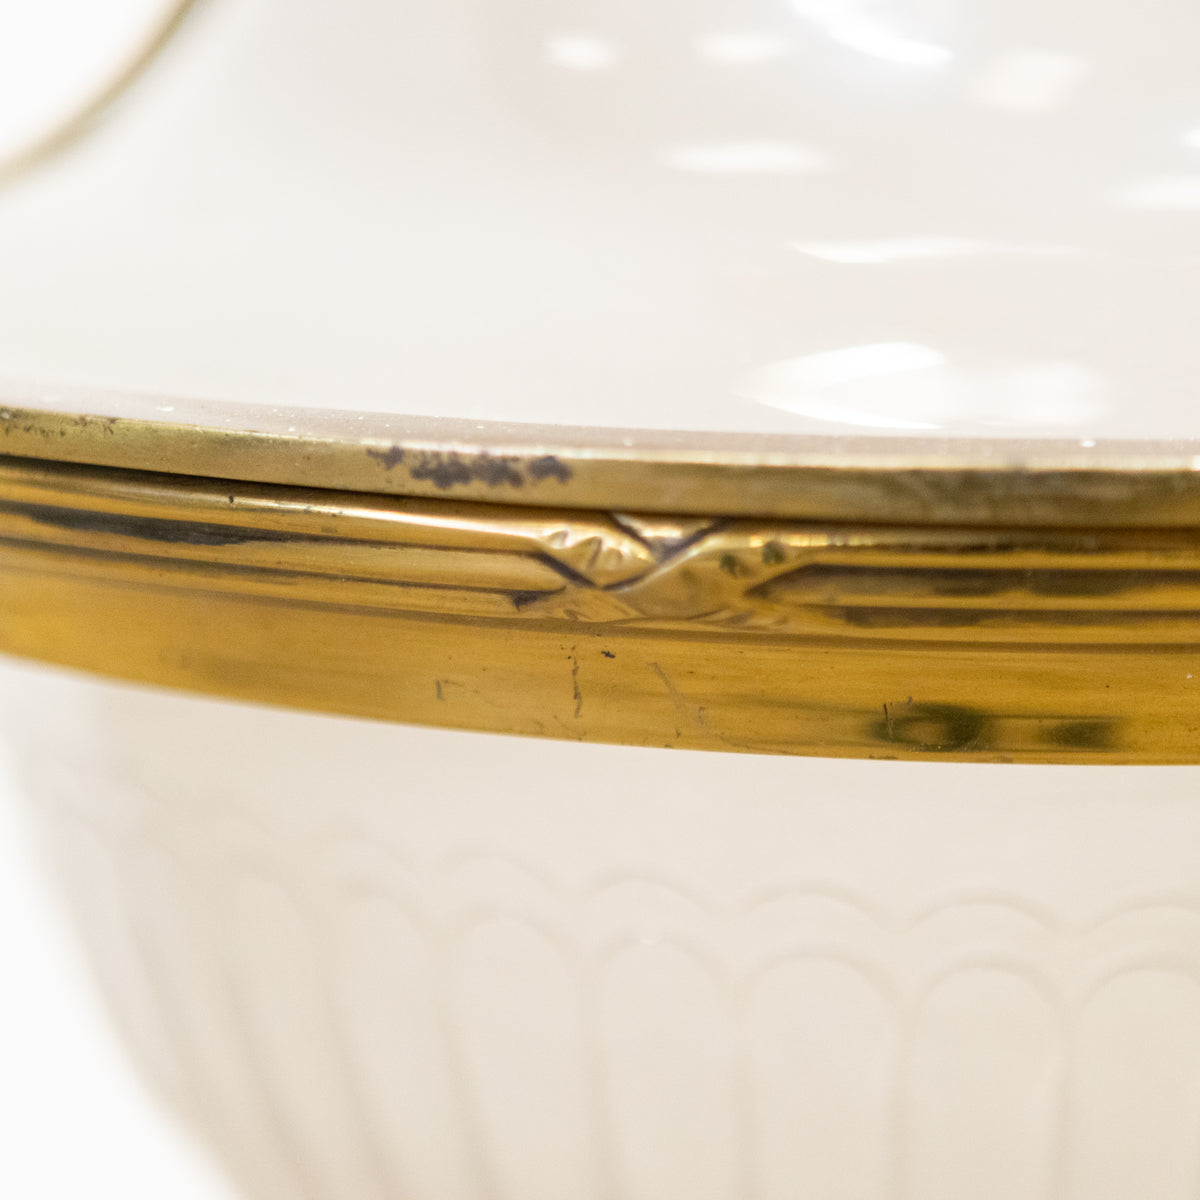 Antique Art Deco Glass &amp; Brass Ceiling Light | The Architectural Forum